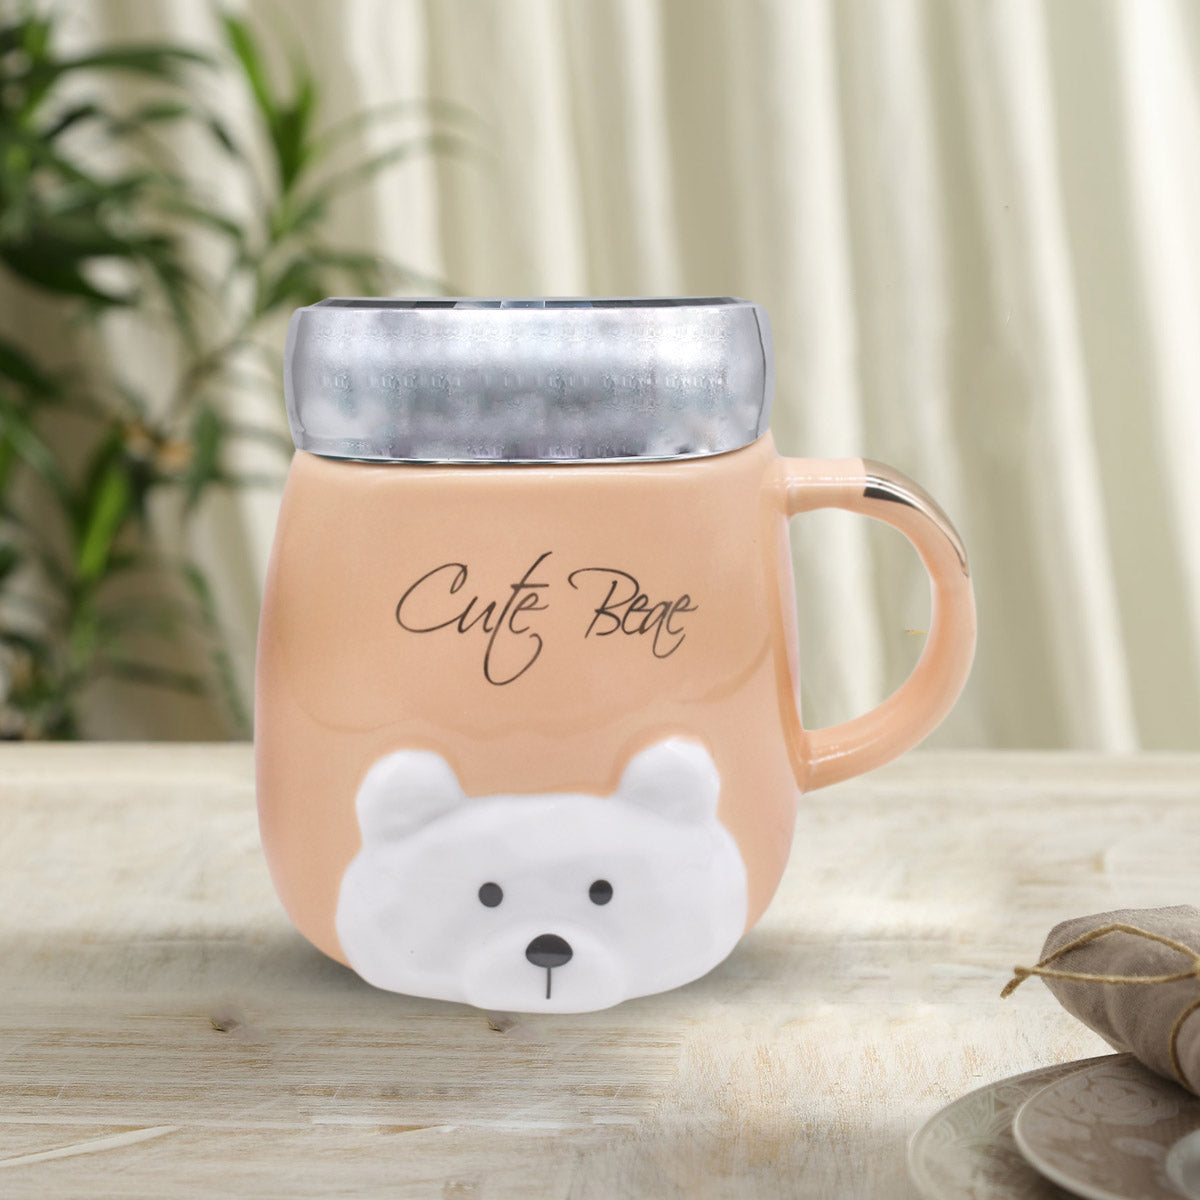 Fancy Ceramic Coffee or Tea Mug with Screw Cap with Handle (8540)